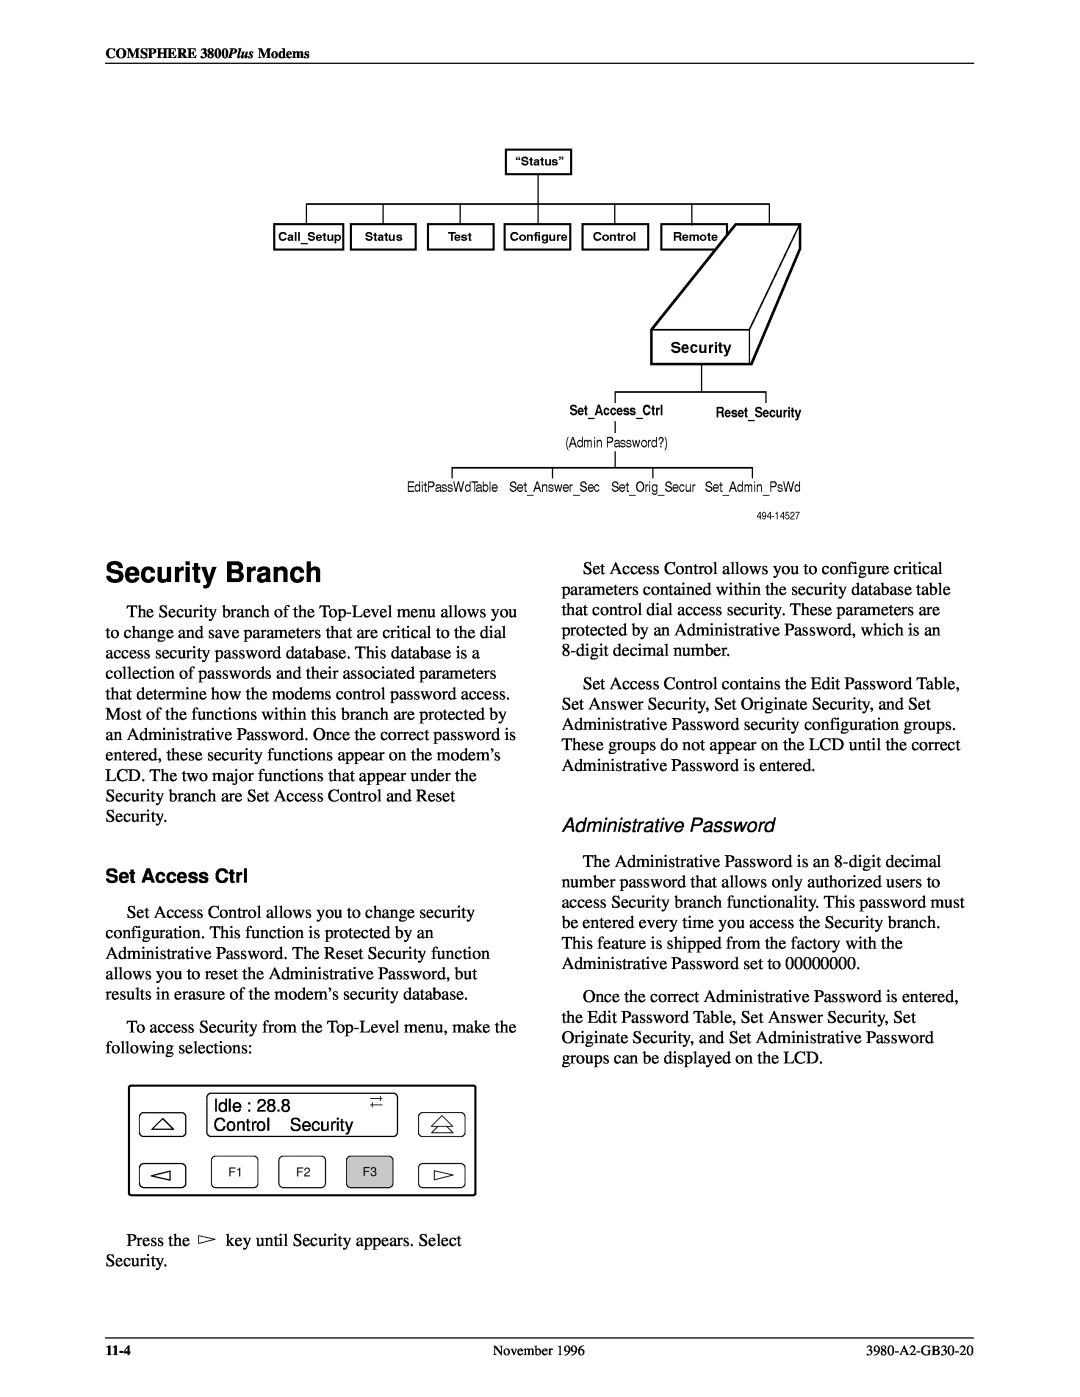 Paradyne 3800PLUS manual Security Branch, Set Access Ctrl, Administrative Password 